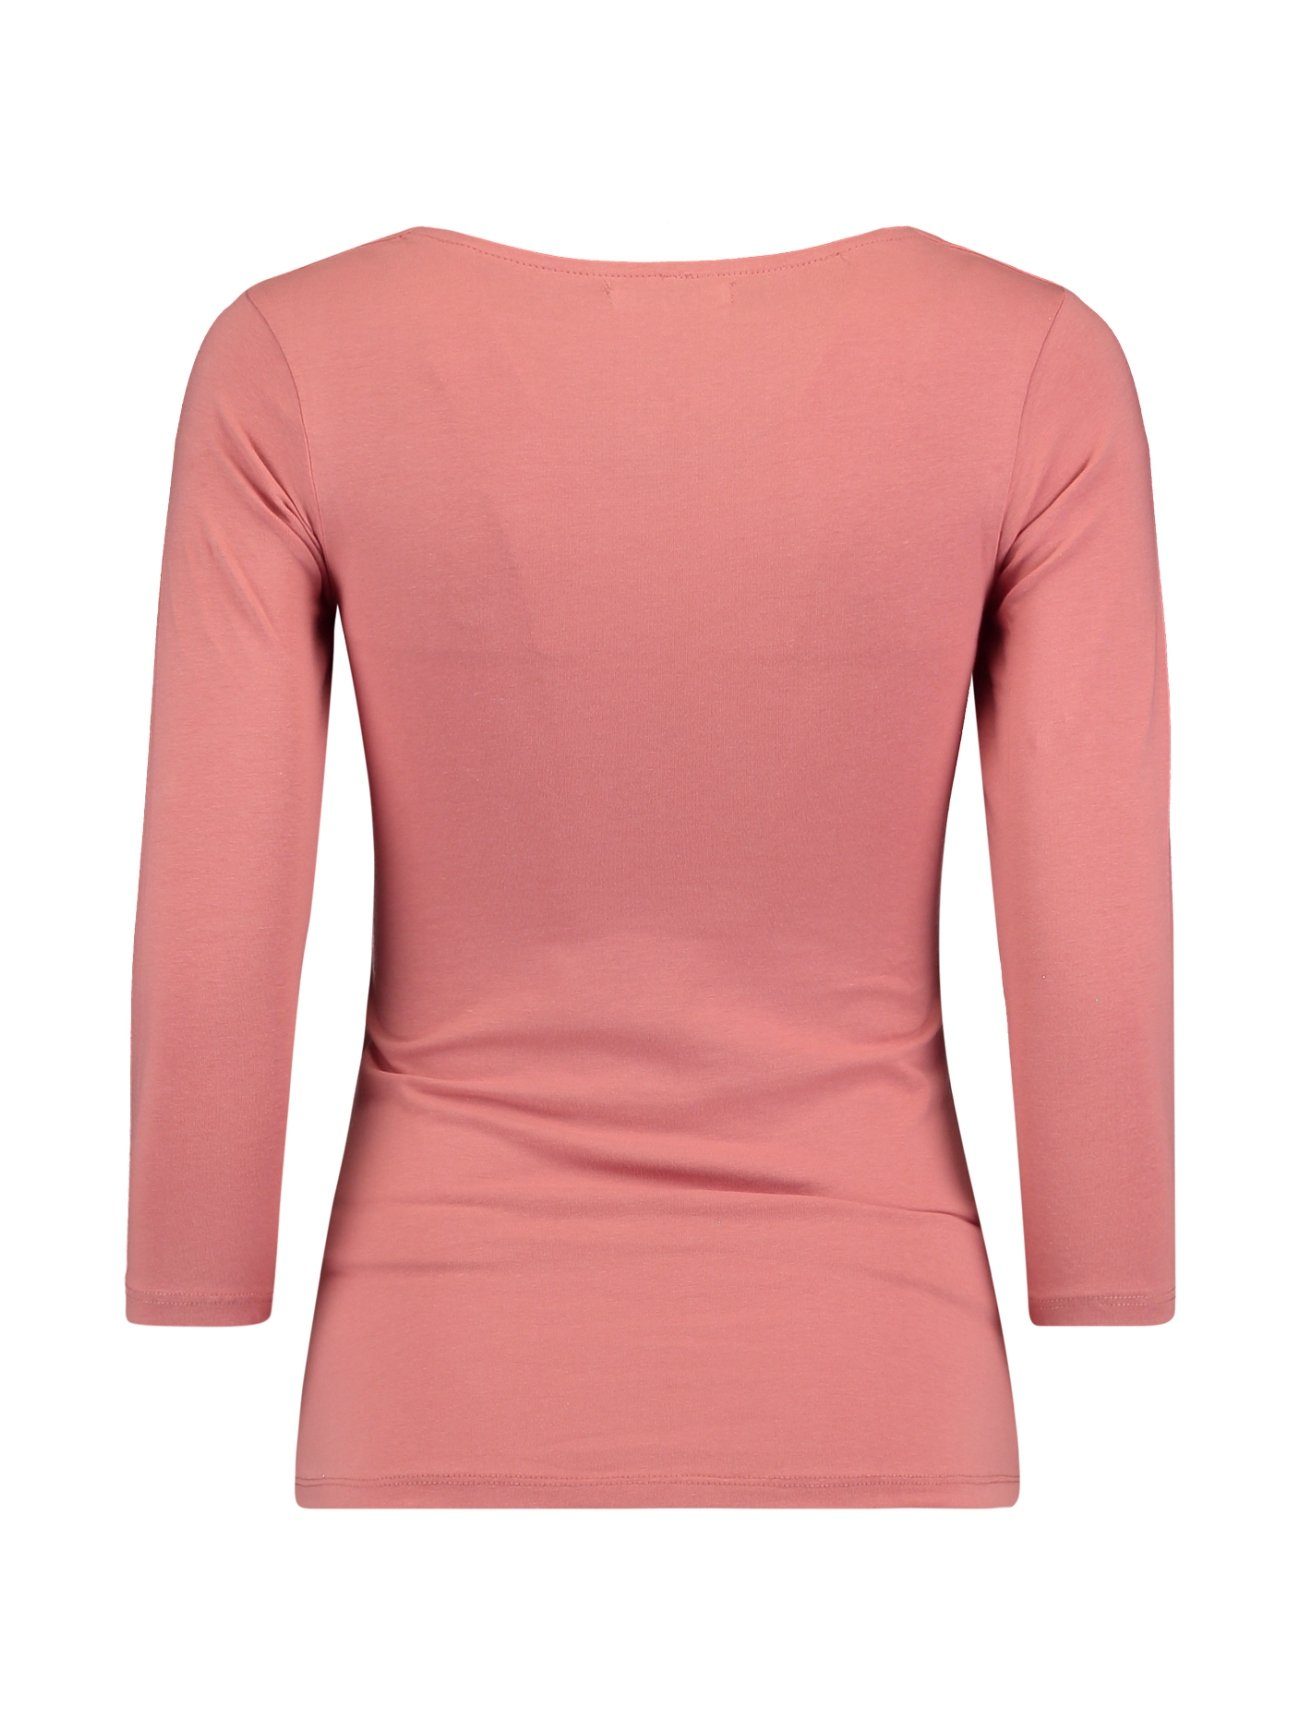 HaILY’S T-Shirt Dünnes Longsleeve NOA in 4691 (2-tlg) Pink-2 2-er 3/4 Set Stretch Arm Stück Shirt